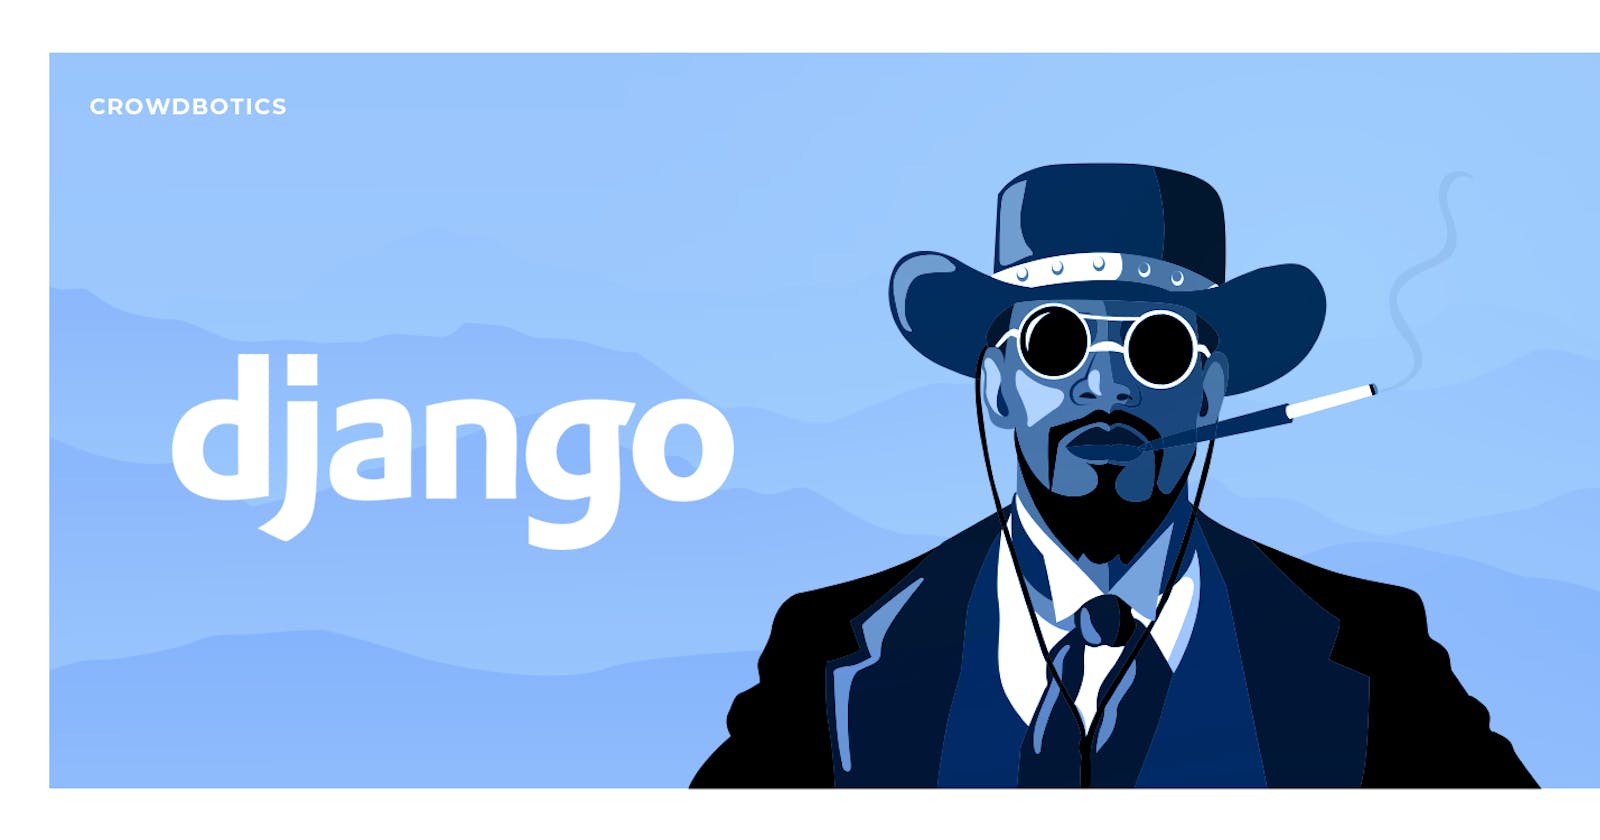 Why Django?